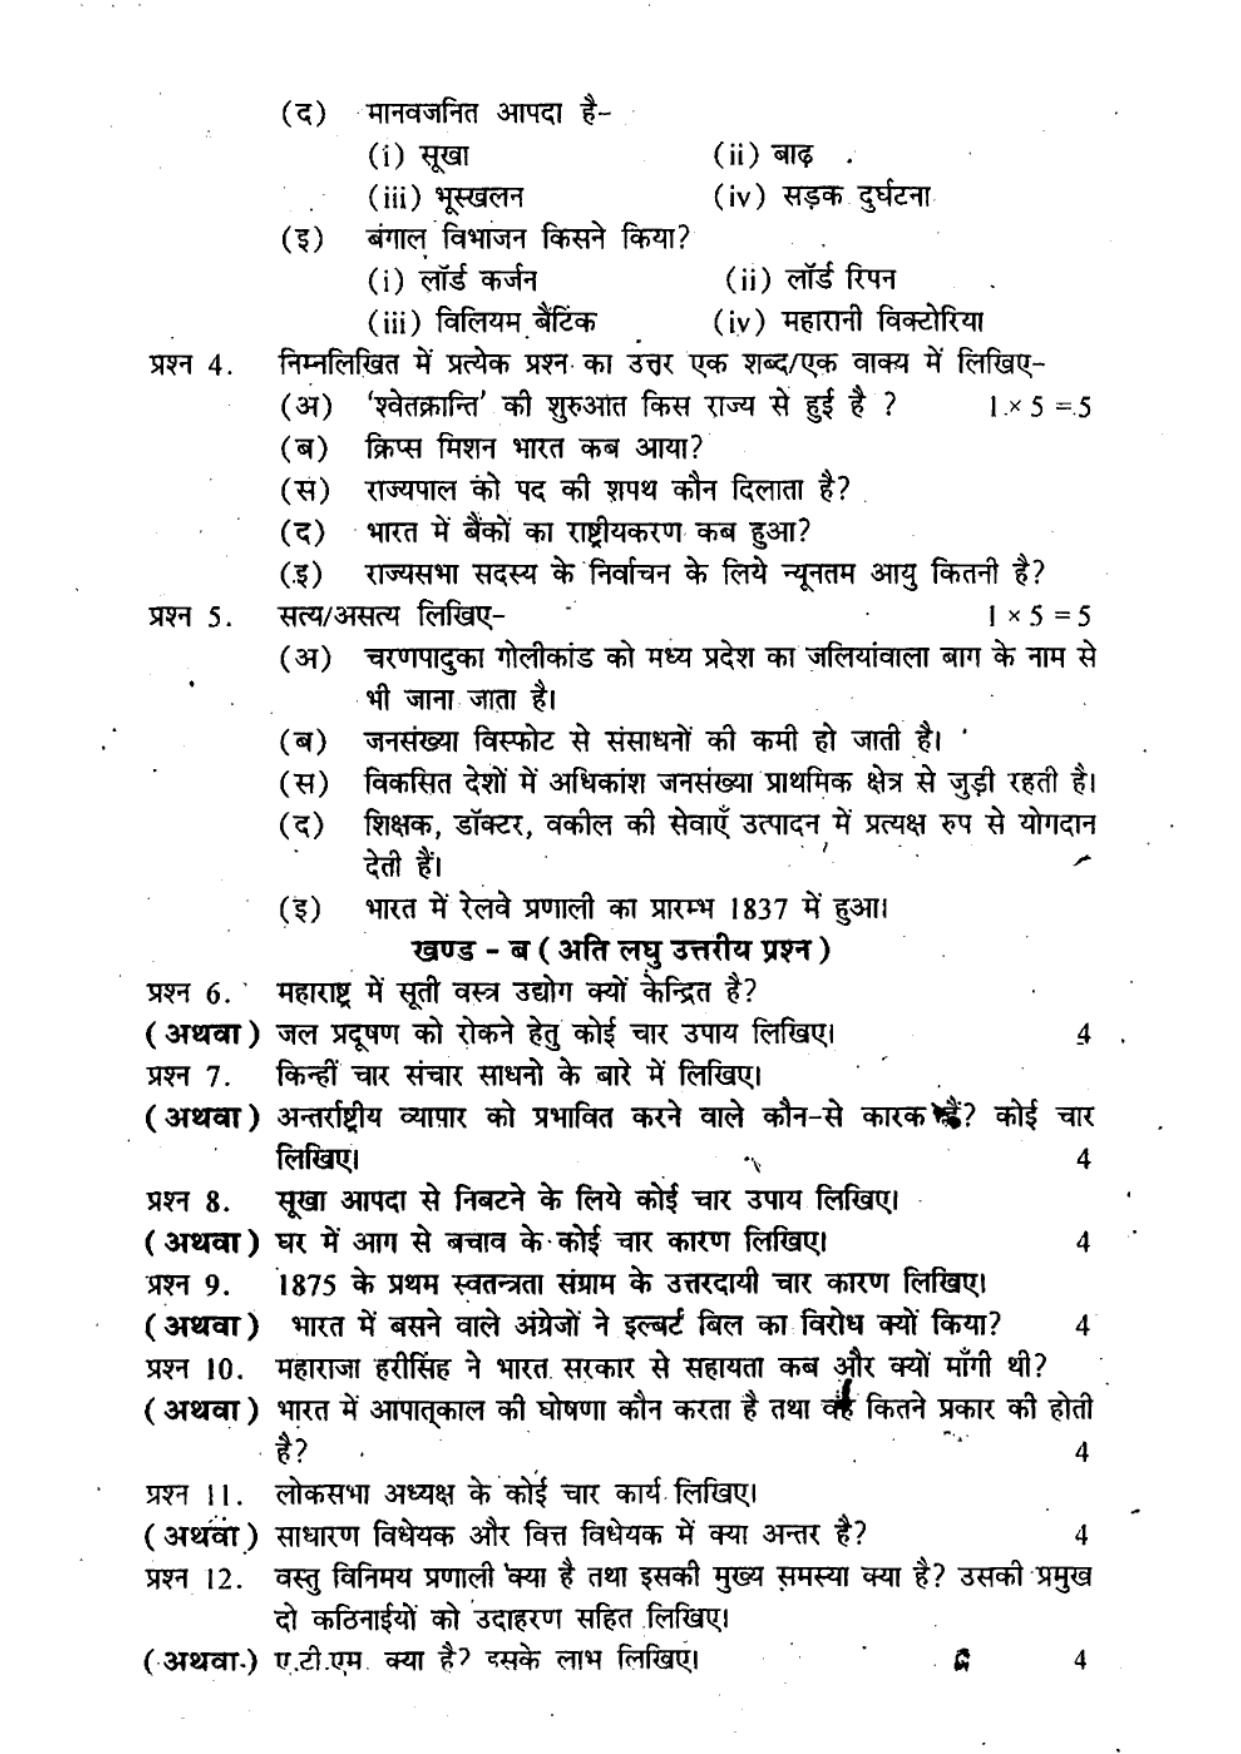 MP Board Class 10 Social Science (Hindi Medium) 2012 Question Paper - Page 2